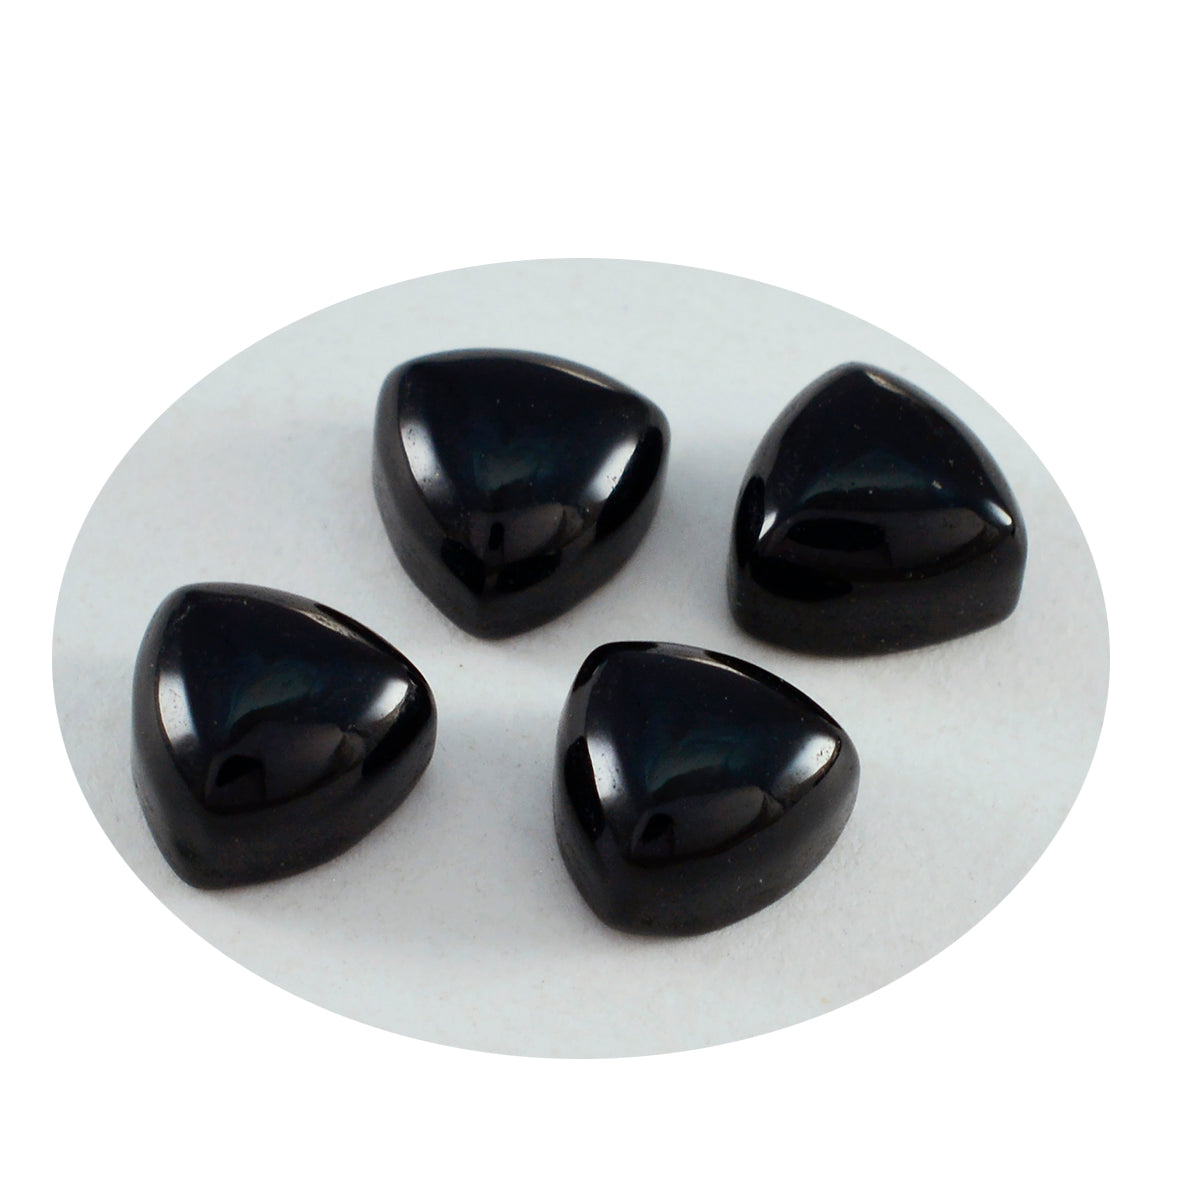 Riyogems 1PC Black Onyx Cabochon 8x8 mm Trillion Shape AAA Quality Gems